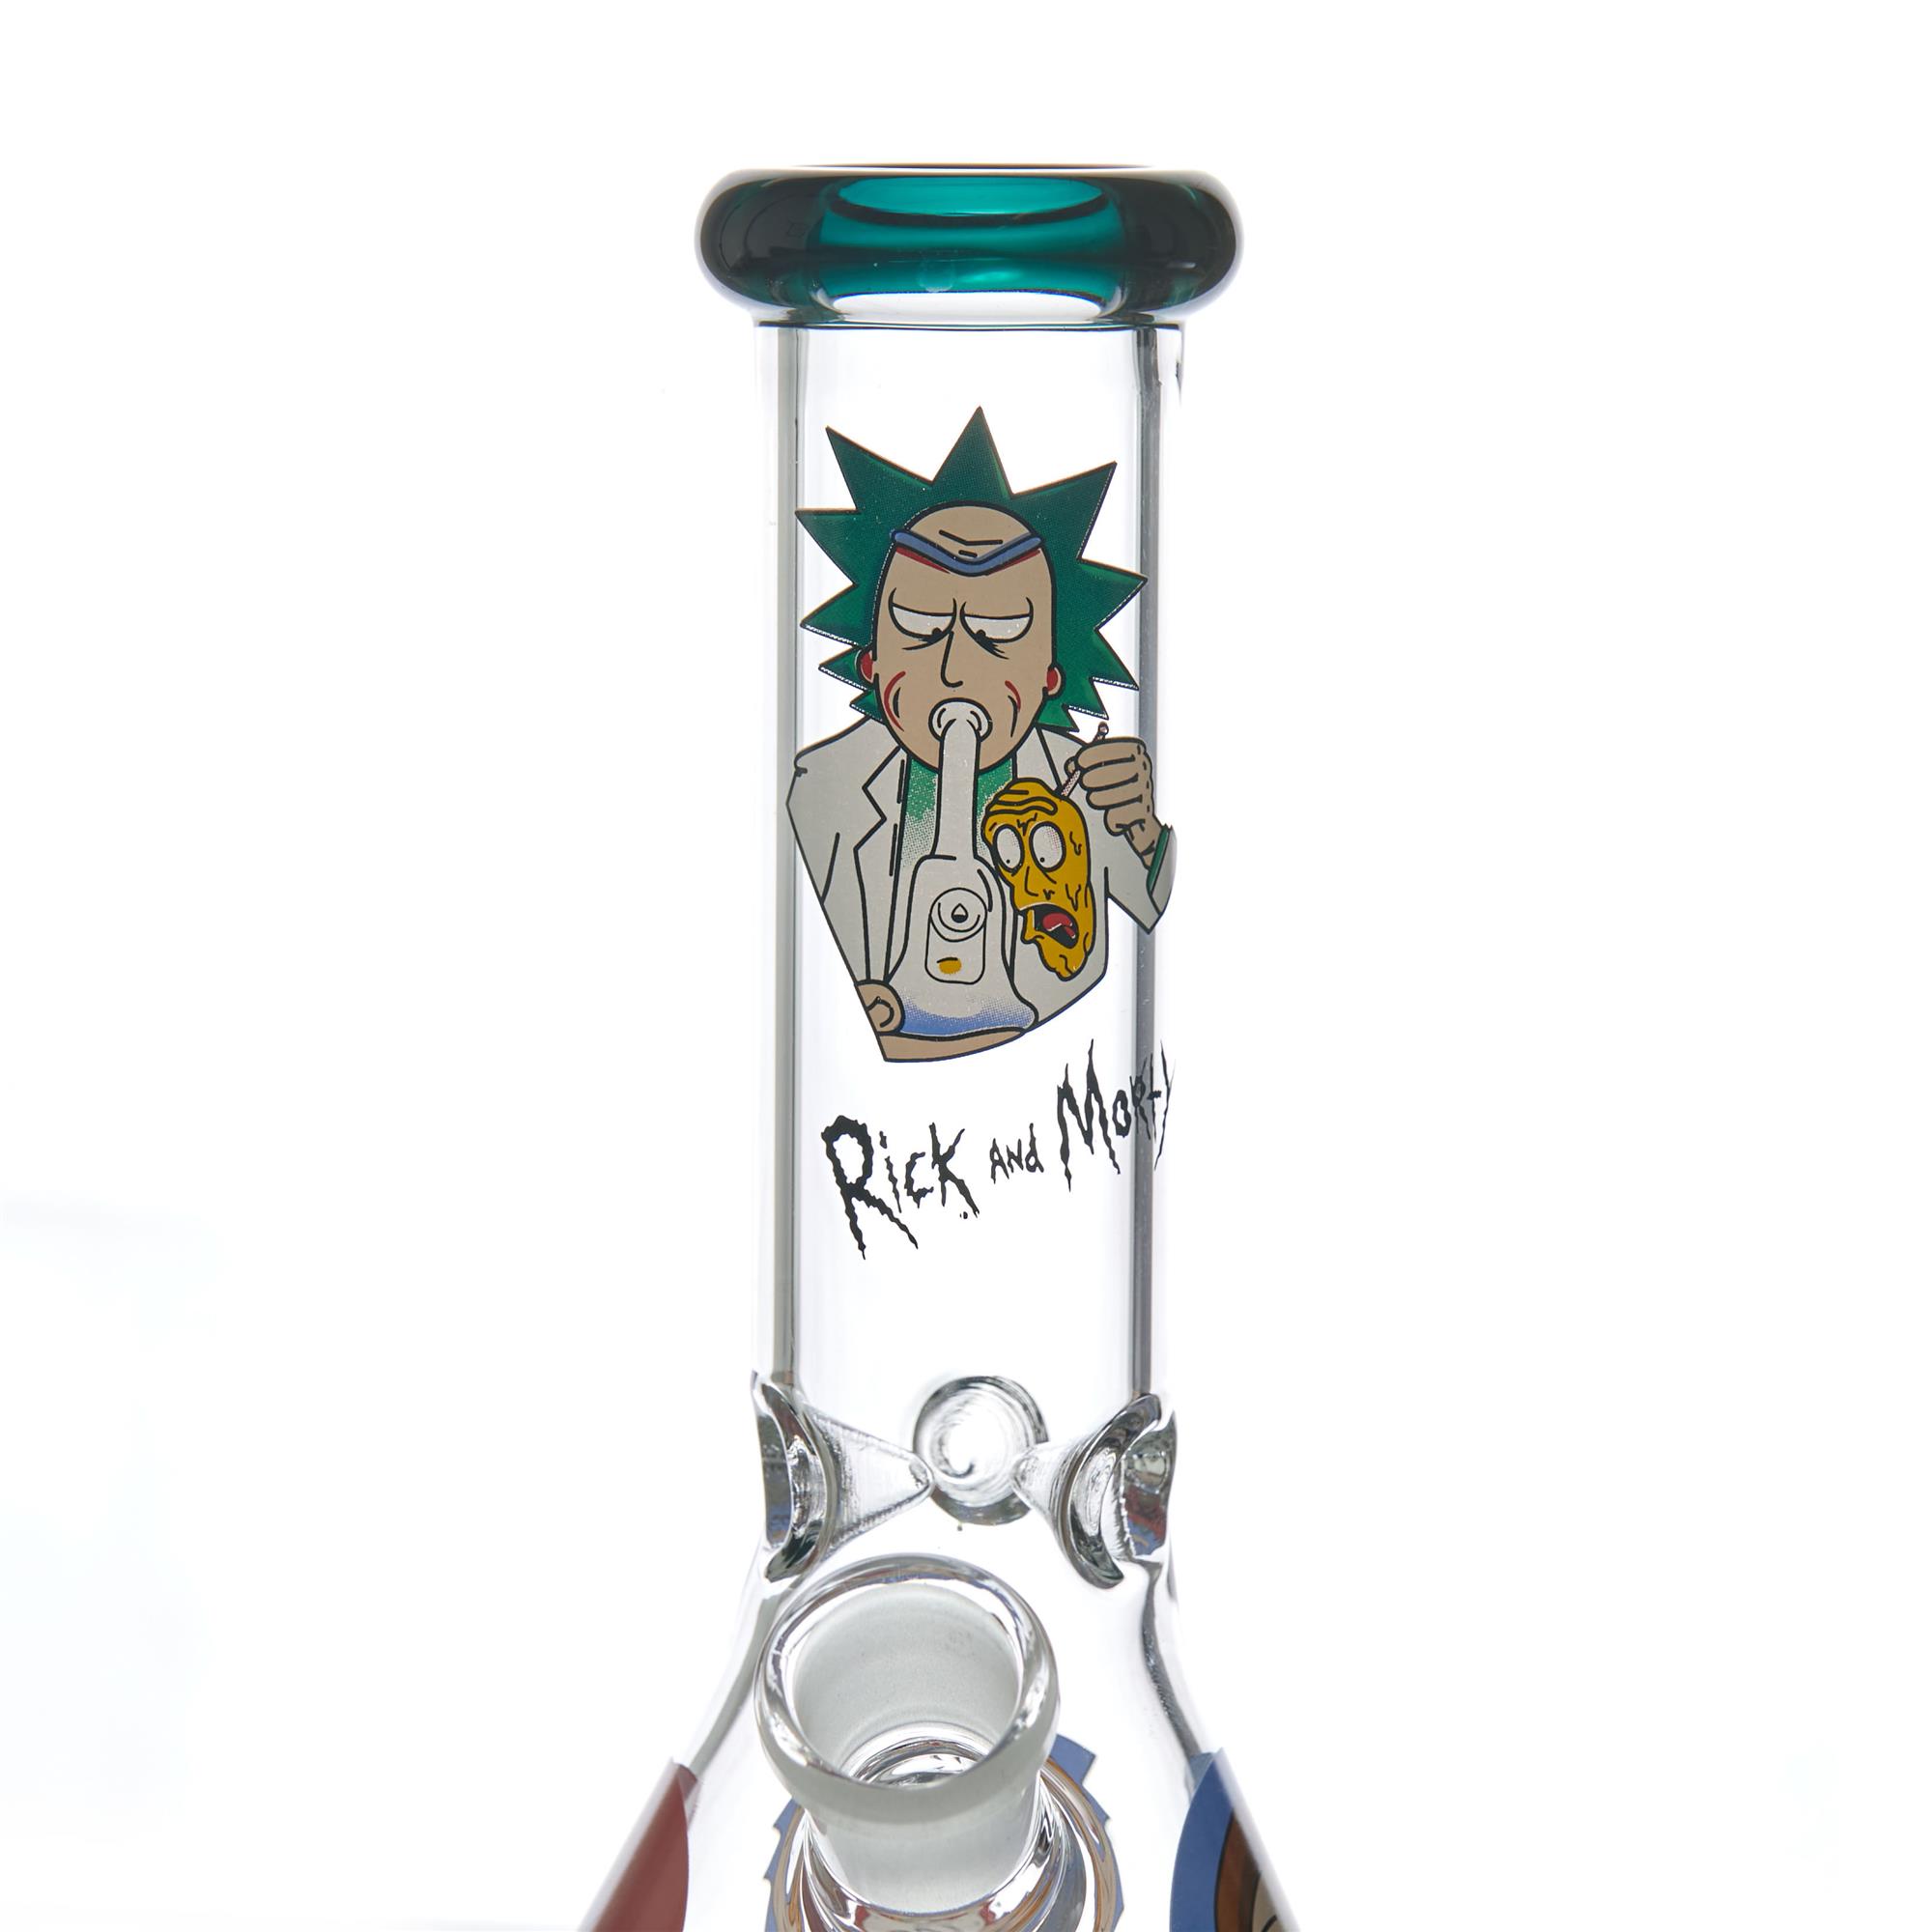 RICK & MORTY GLASS BONG